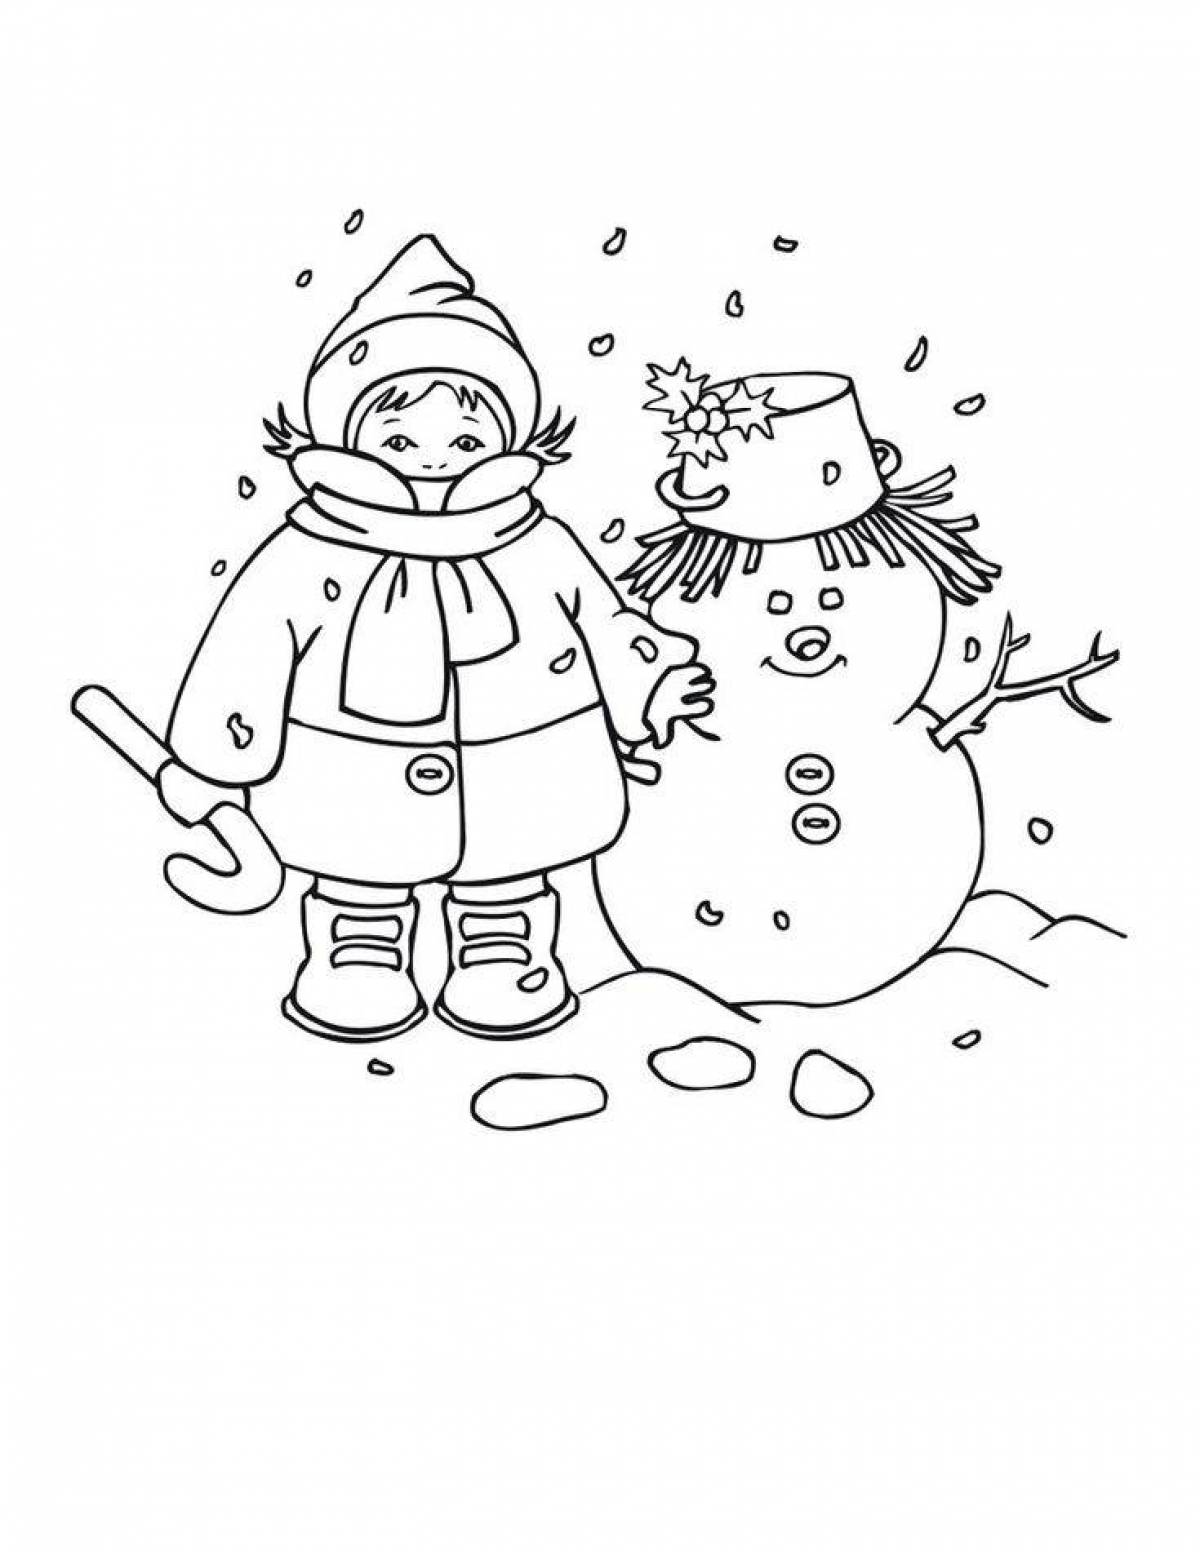 Забавная раскраска зима для детей 5-6 лет